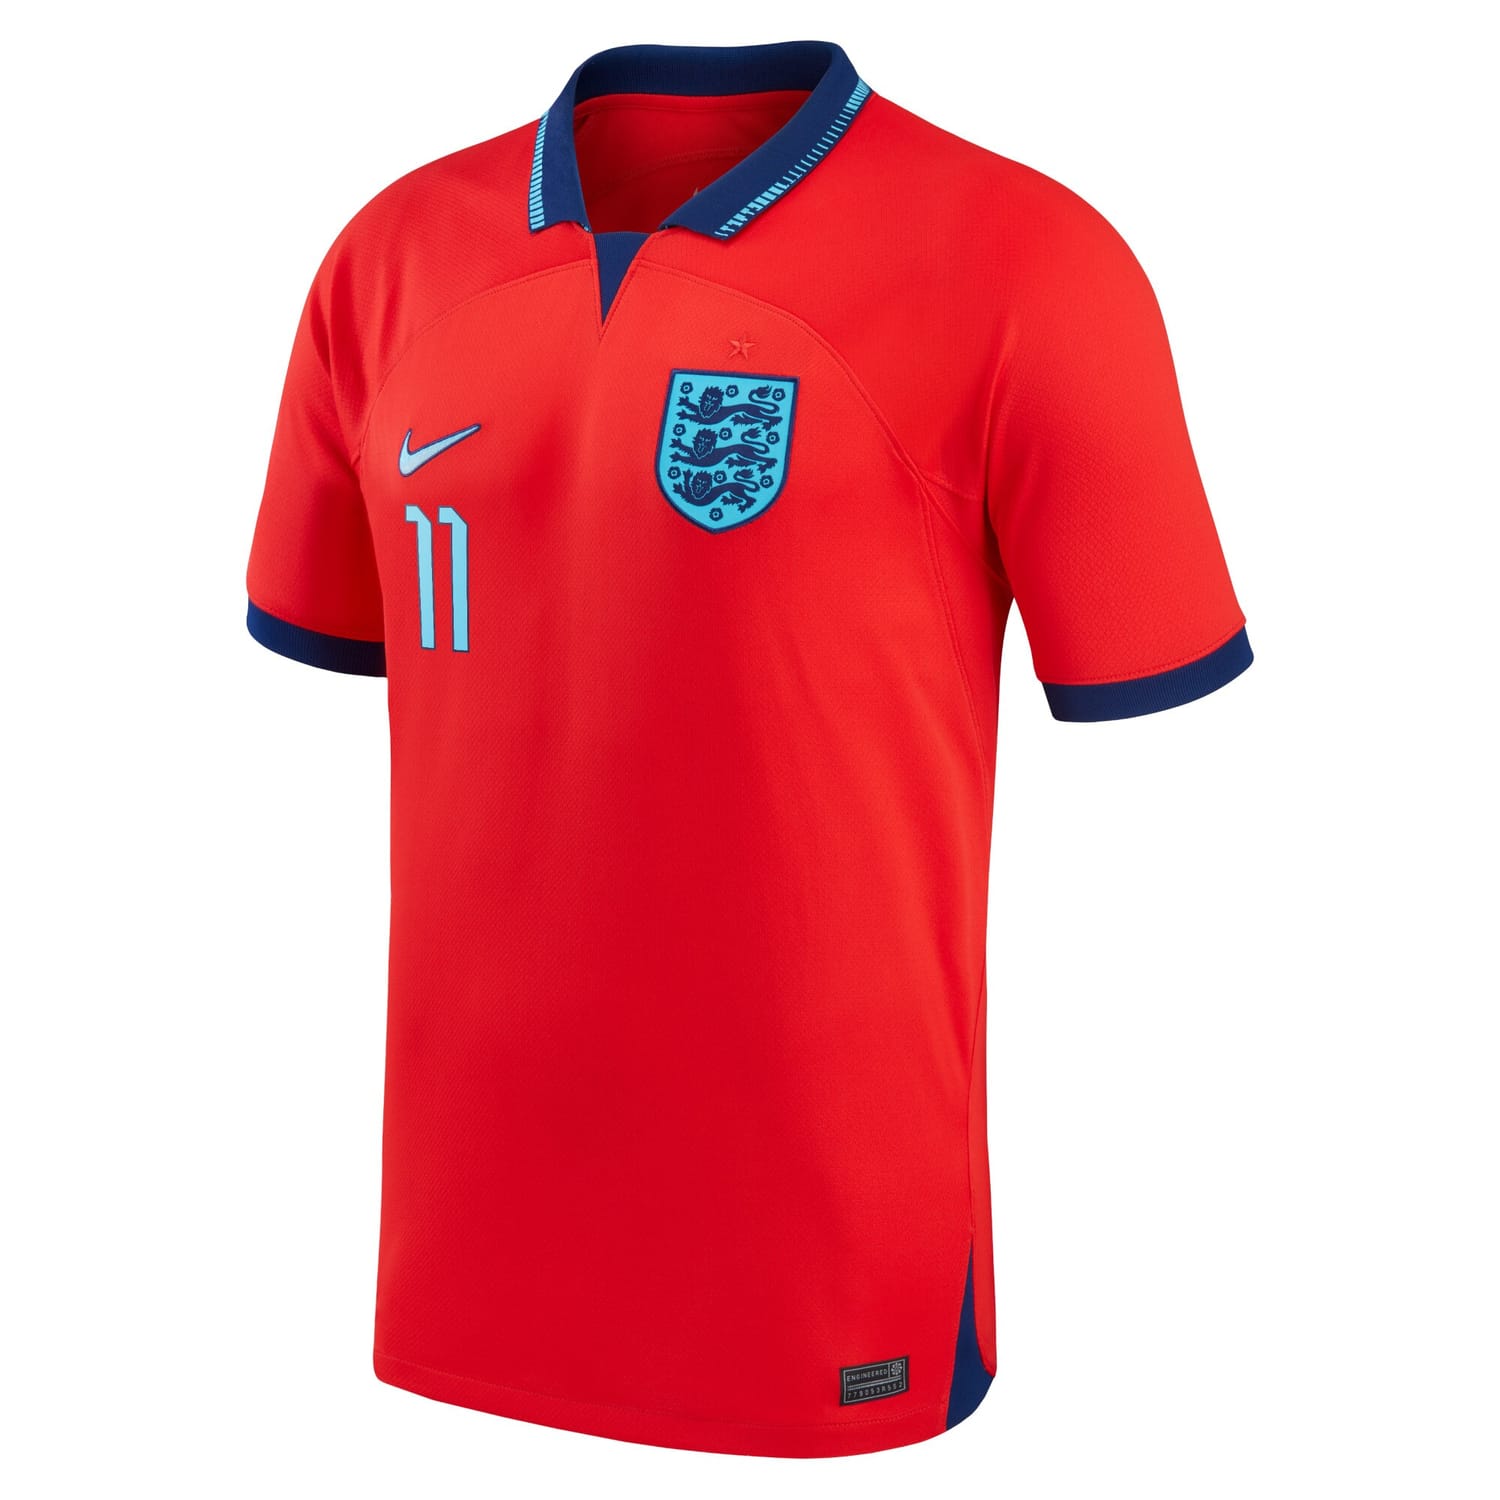 England National Team Away Jersey Shirt 2022 player Marcus Rashford 11 printing for Men